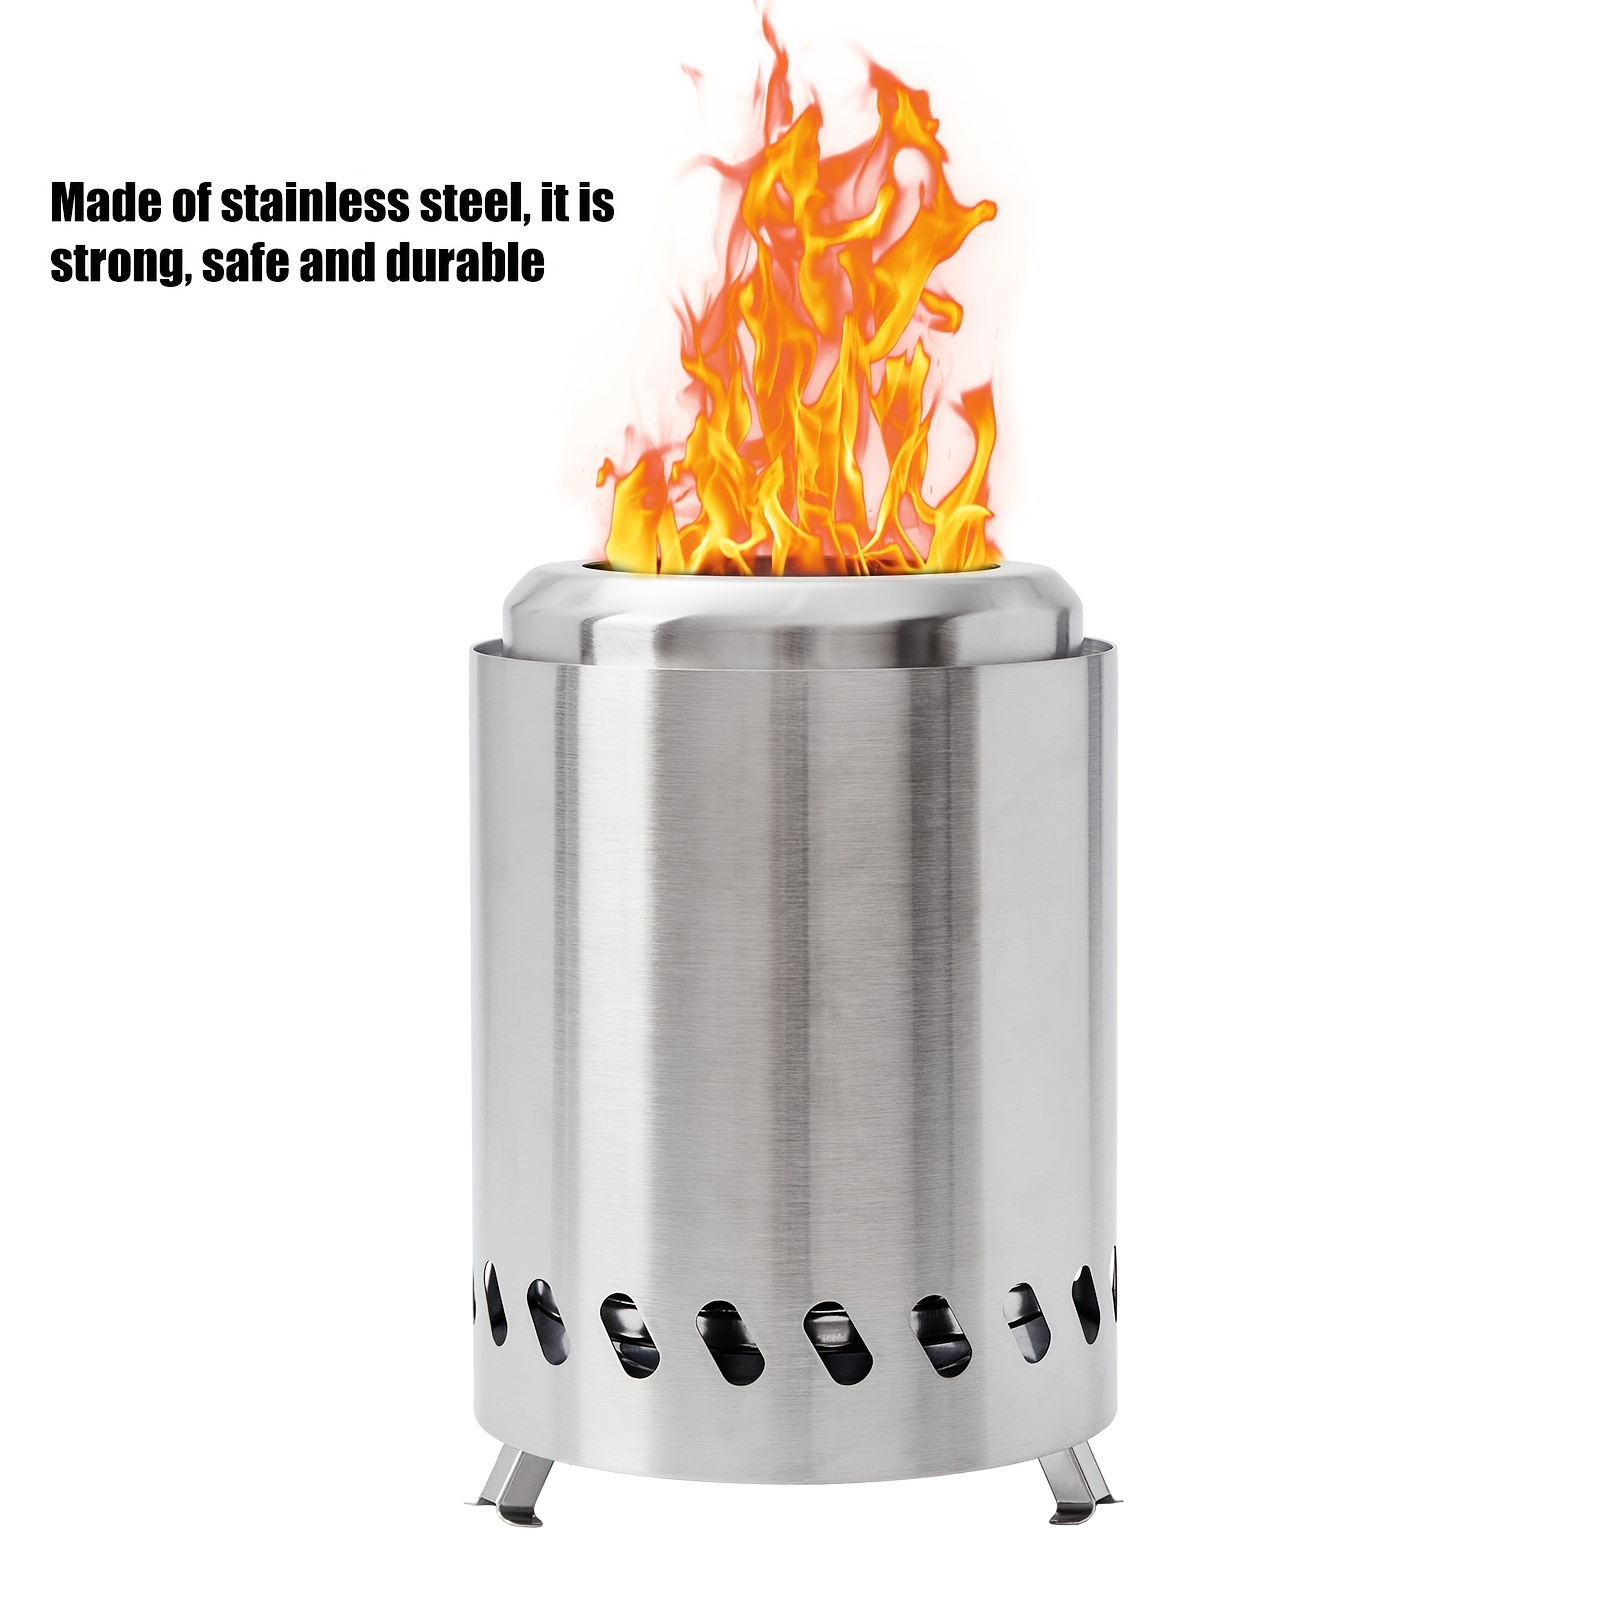 Acier inoxydable - Bac à feu brûlant, baril de combustion